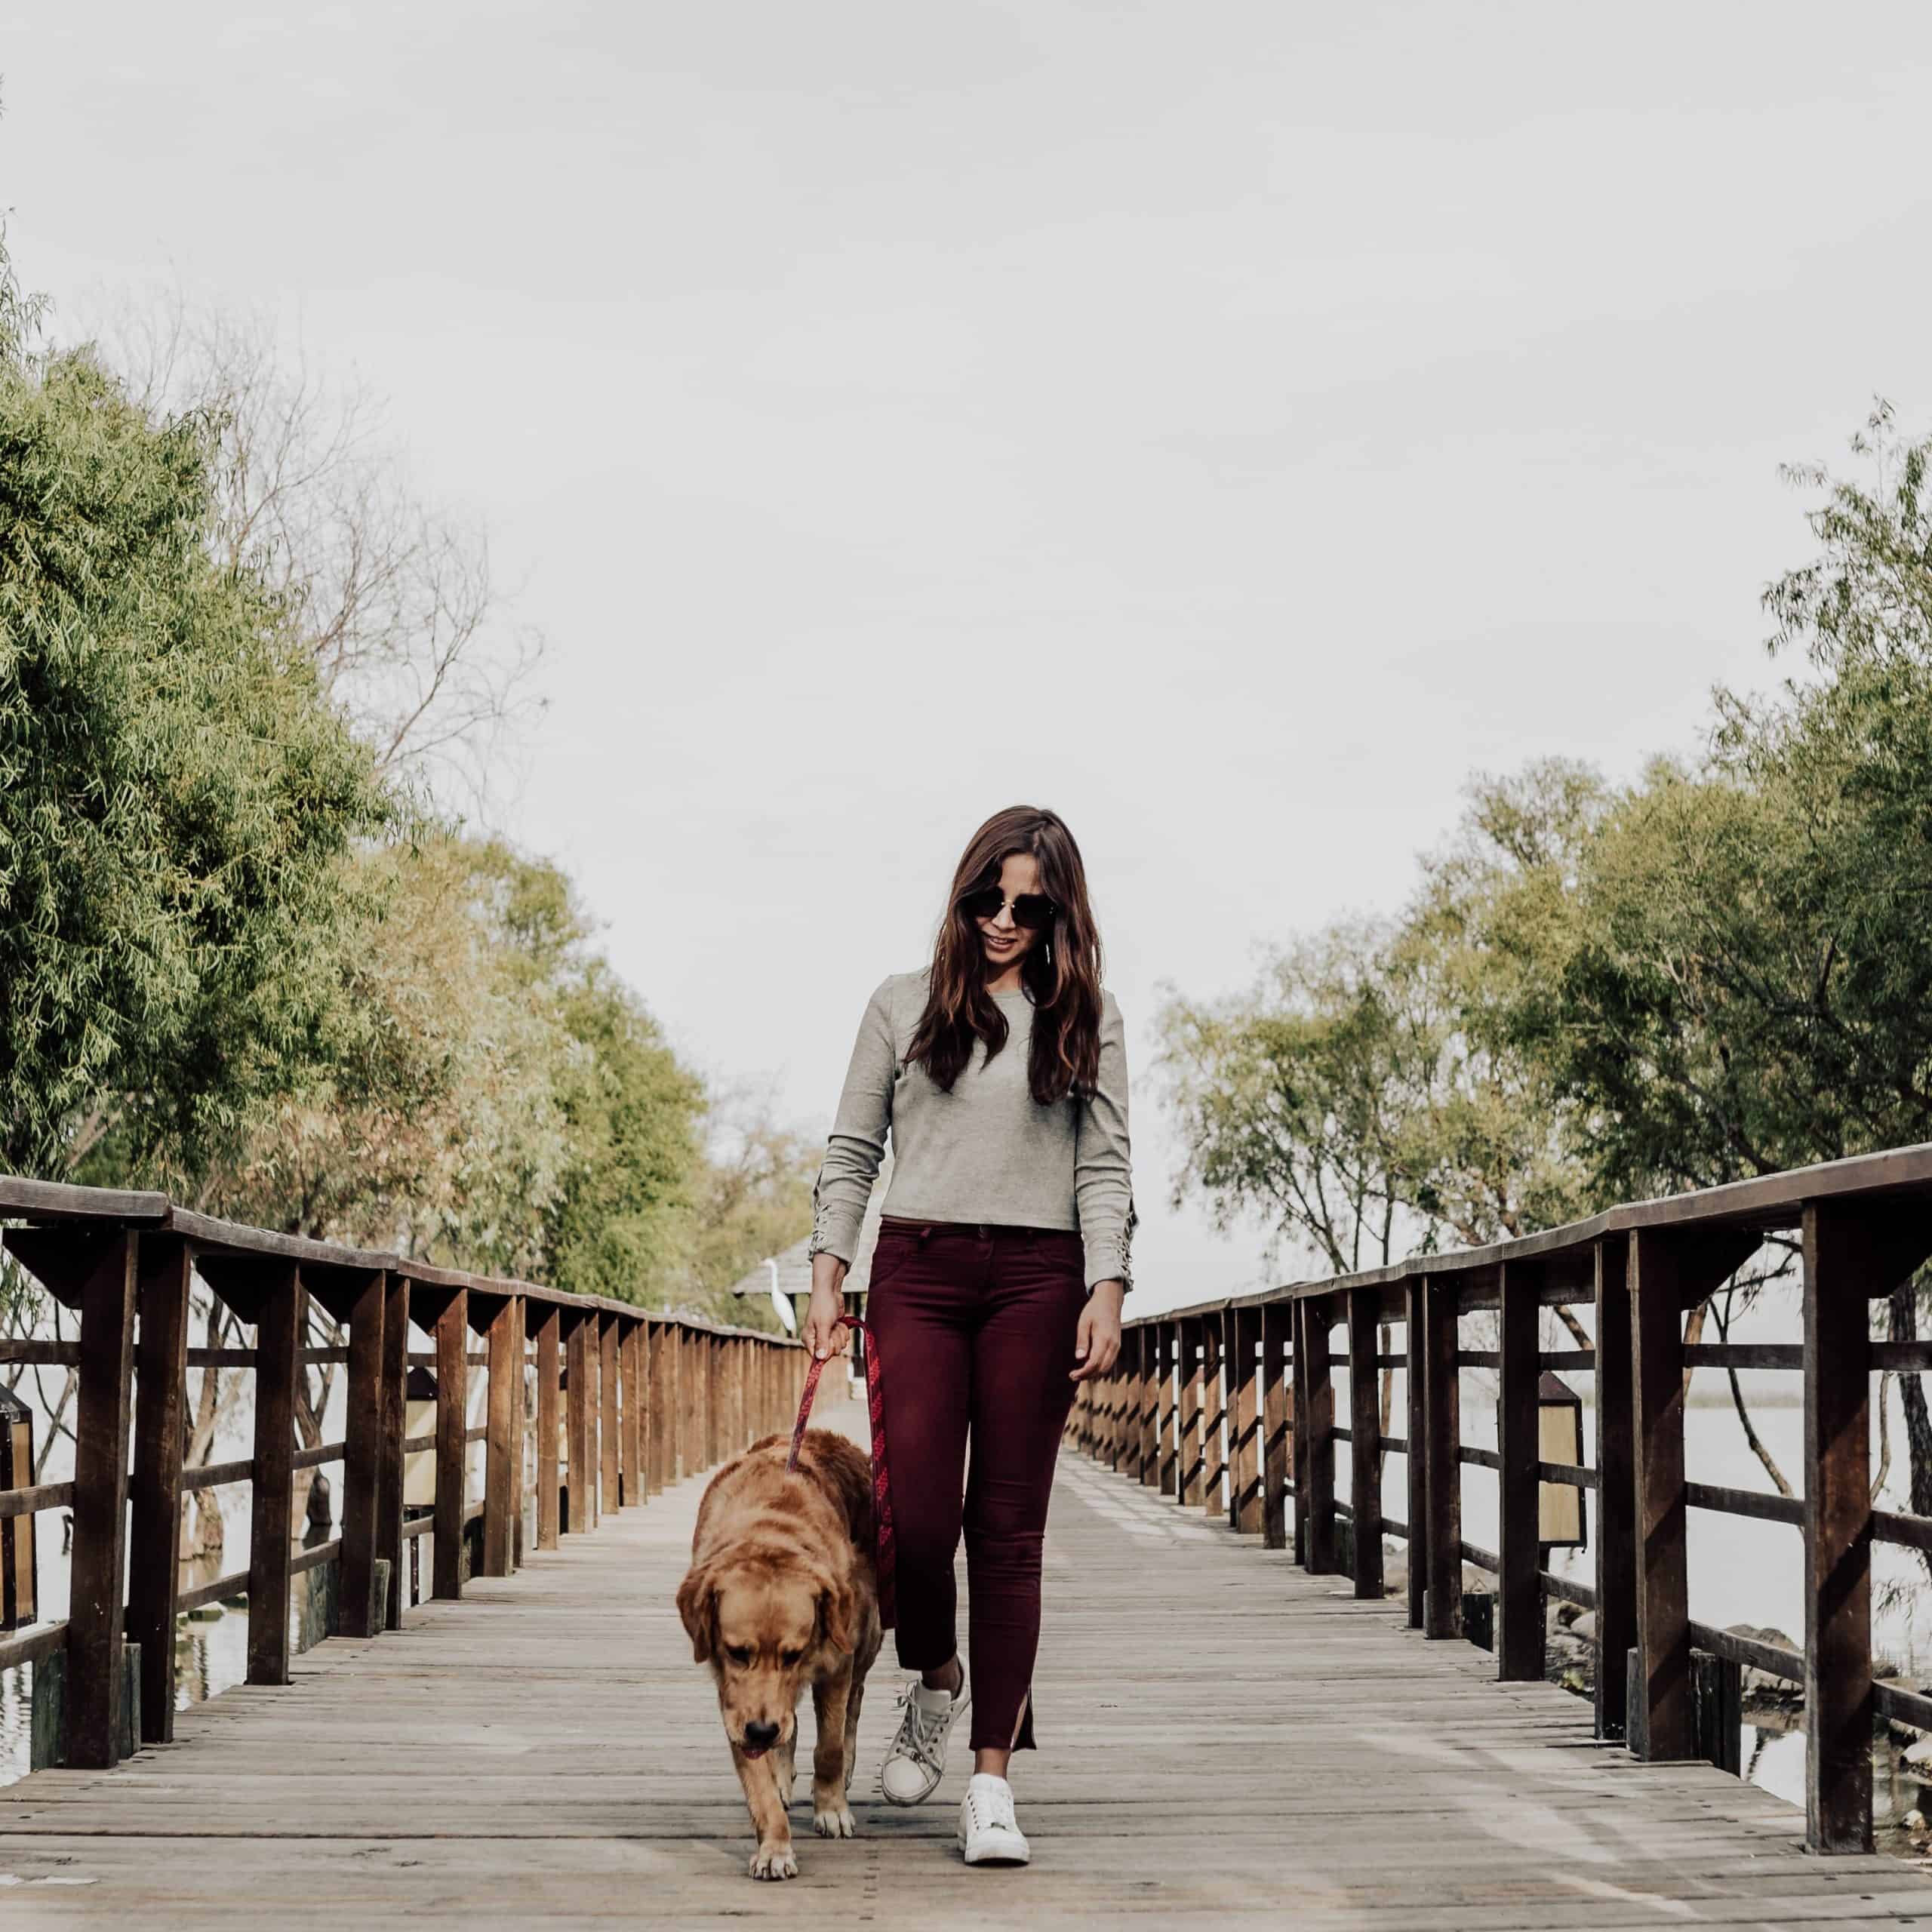 Girl walking a dog on a wooden bridge